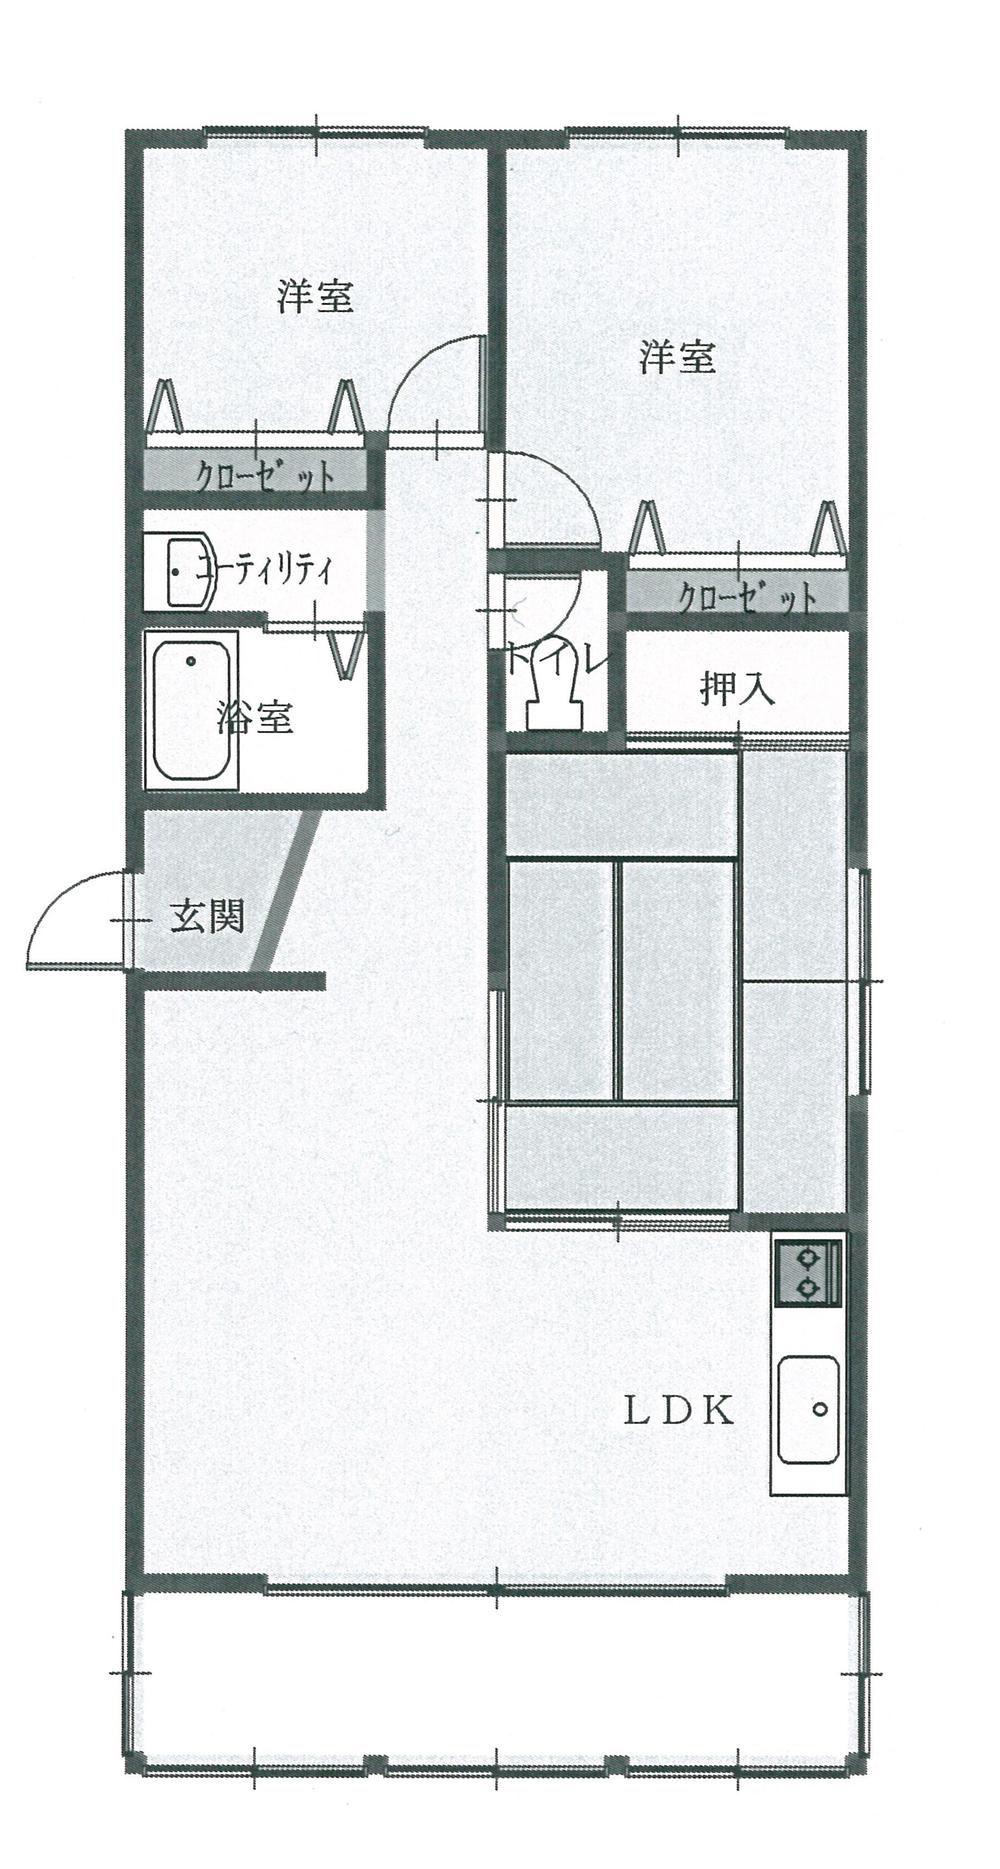 Floor plan. 3LDK, Price 2 million yen, Occupied area 57.97 sq m